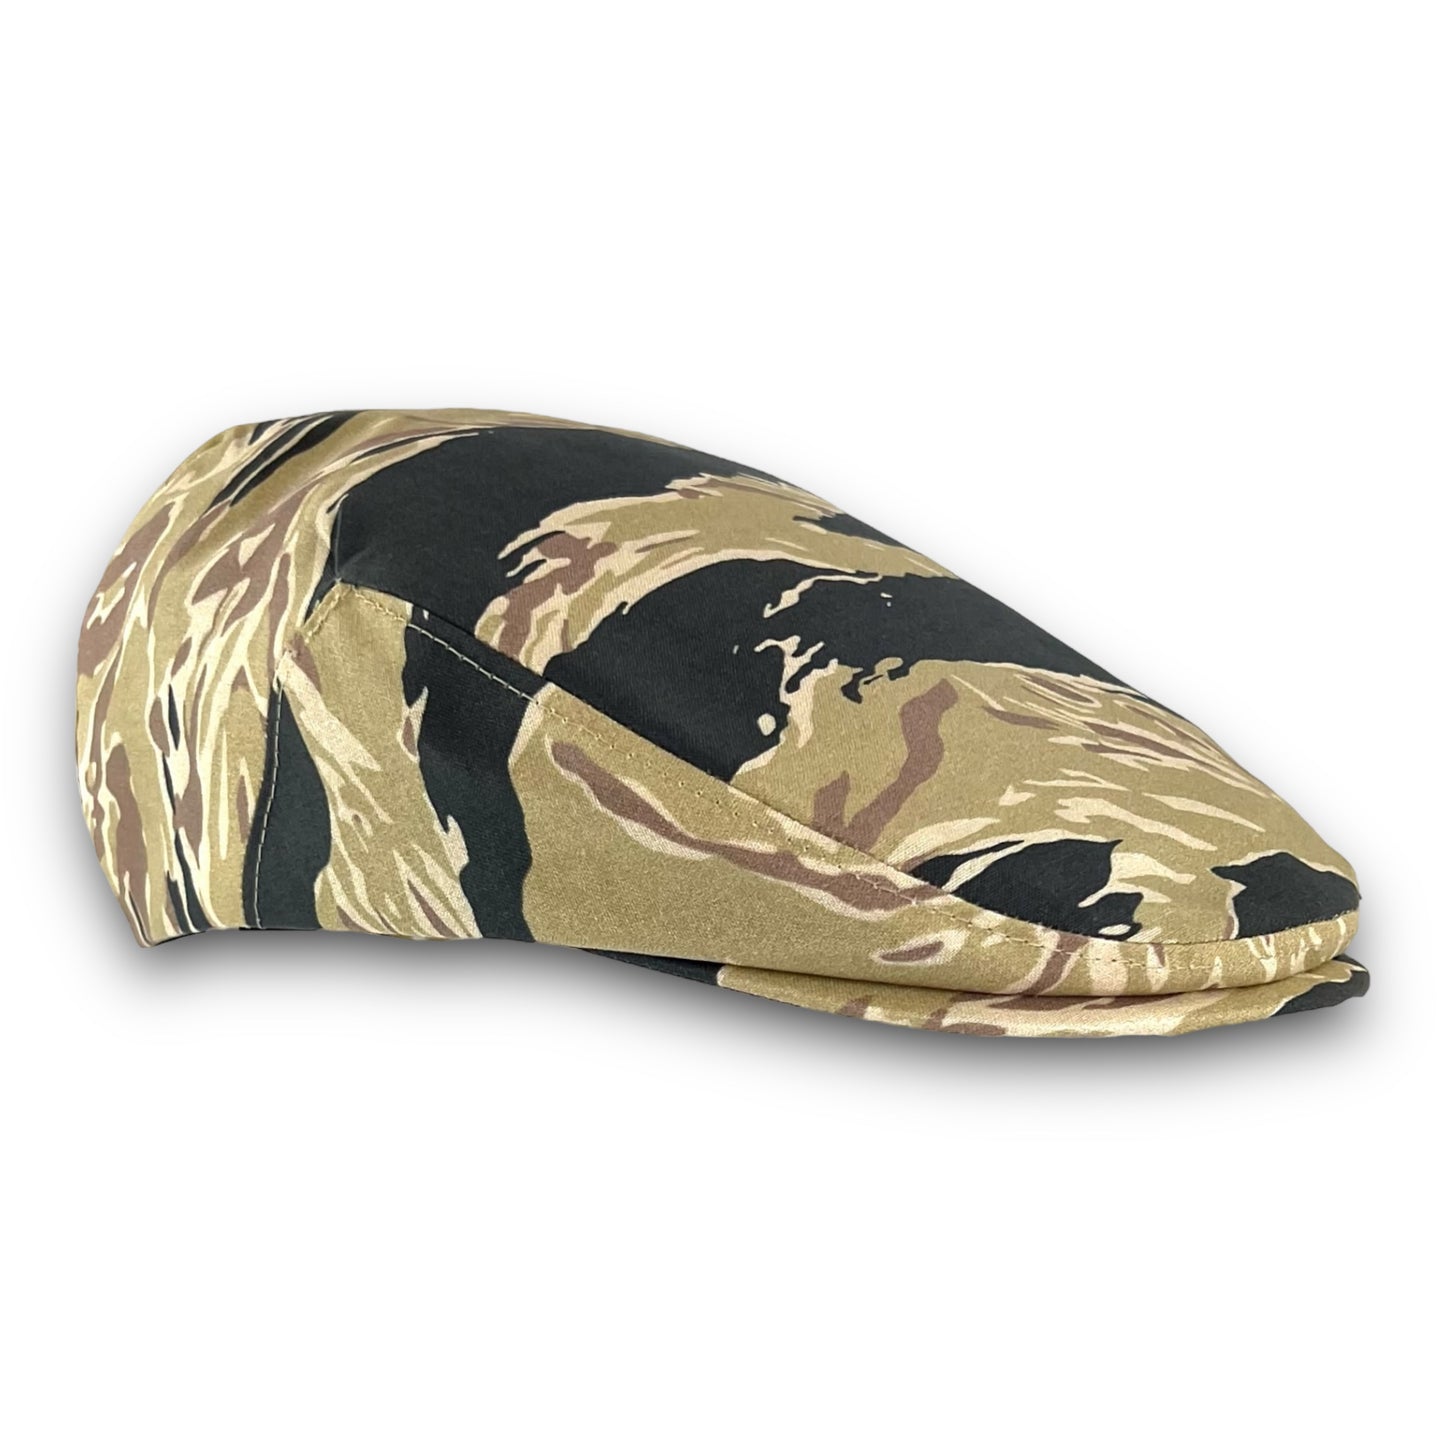 Custom Handmade Flat Cap in Golden Vietnam Tiger Stripe Camouflage Fabric